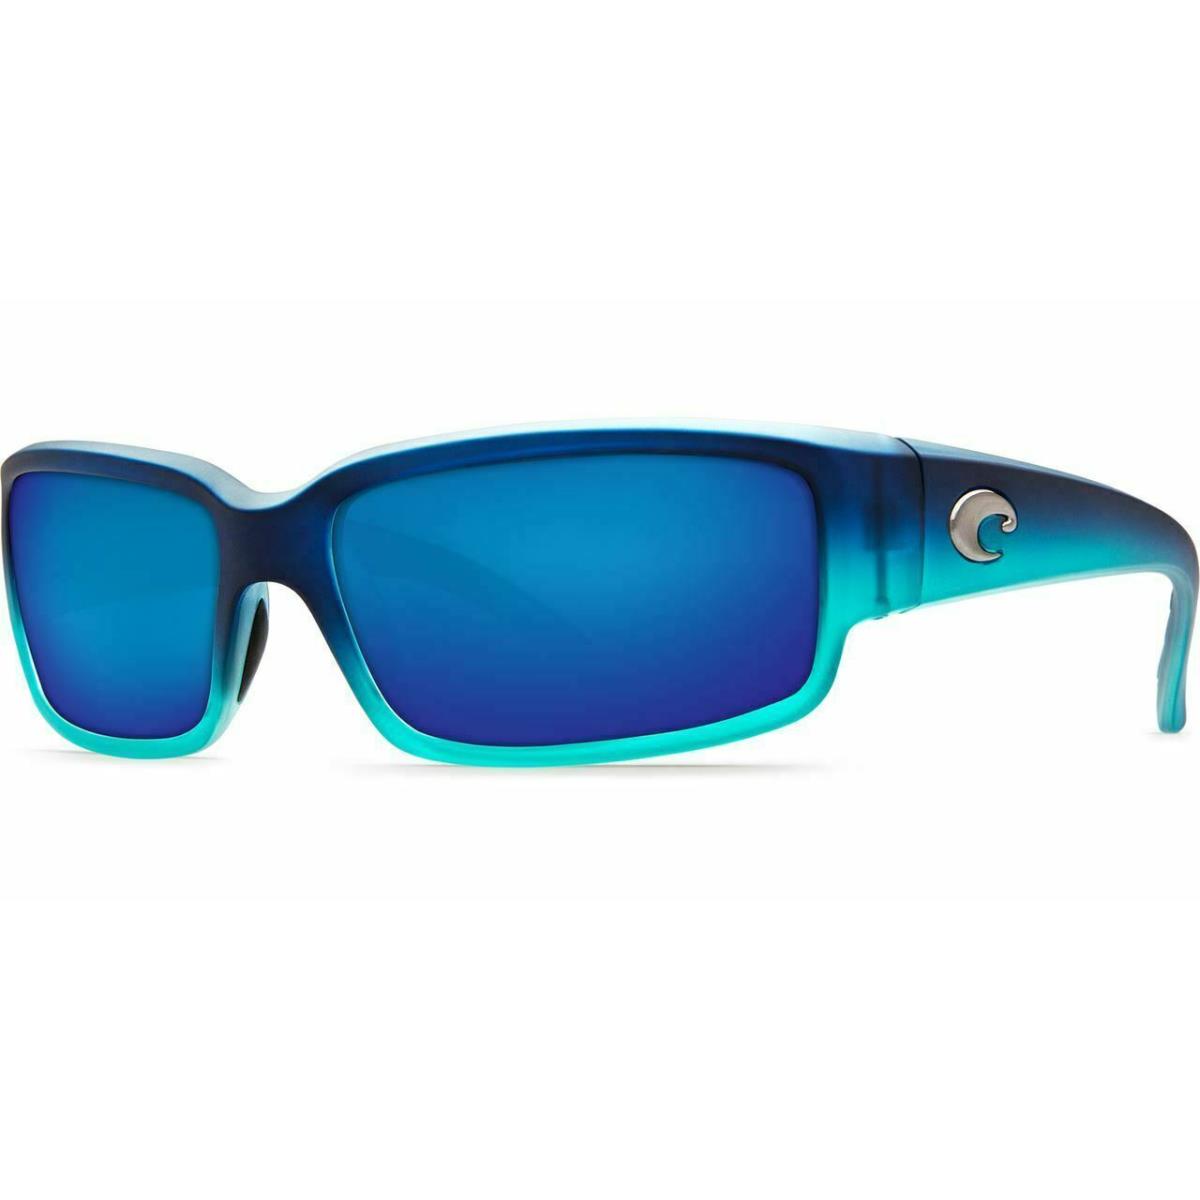 Costa Del Mar Caballito Sunglasses Matte Caribbean Fade Blue 580P CL73OBMP - Frame: Caribbean Fade